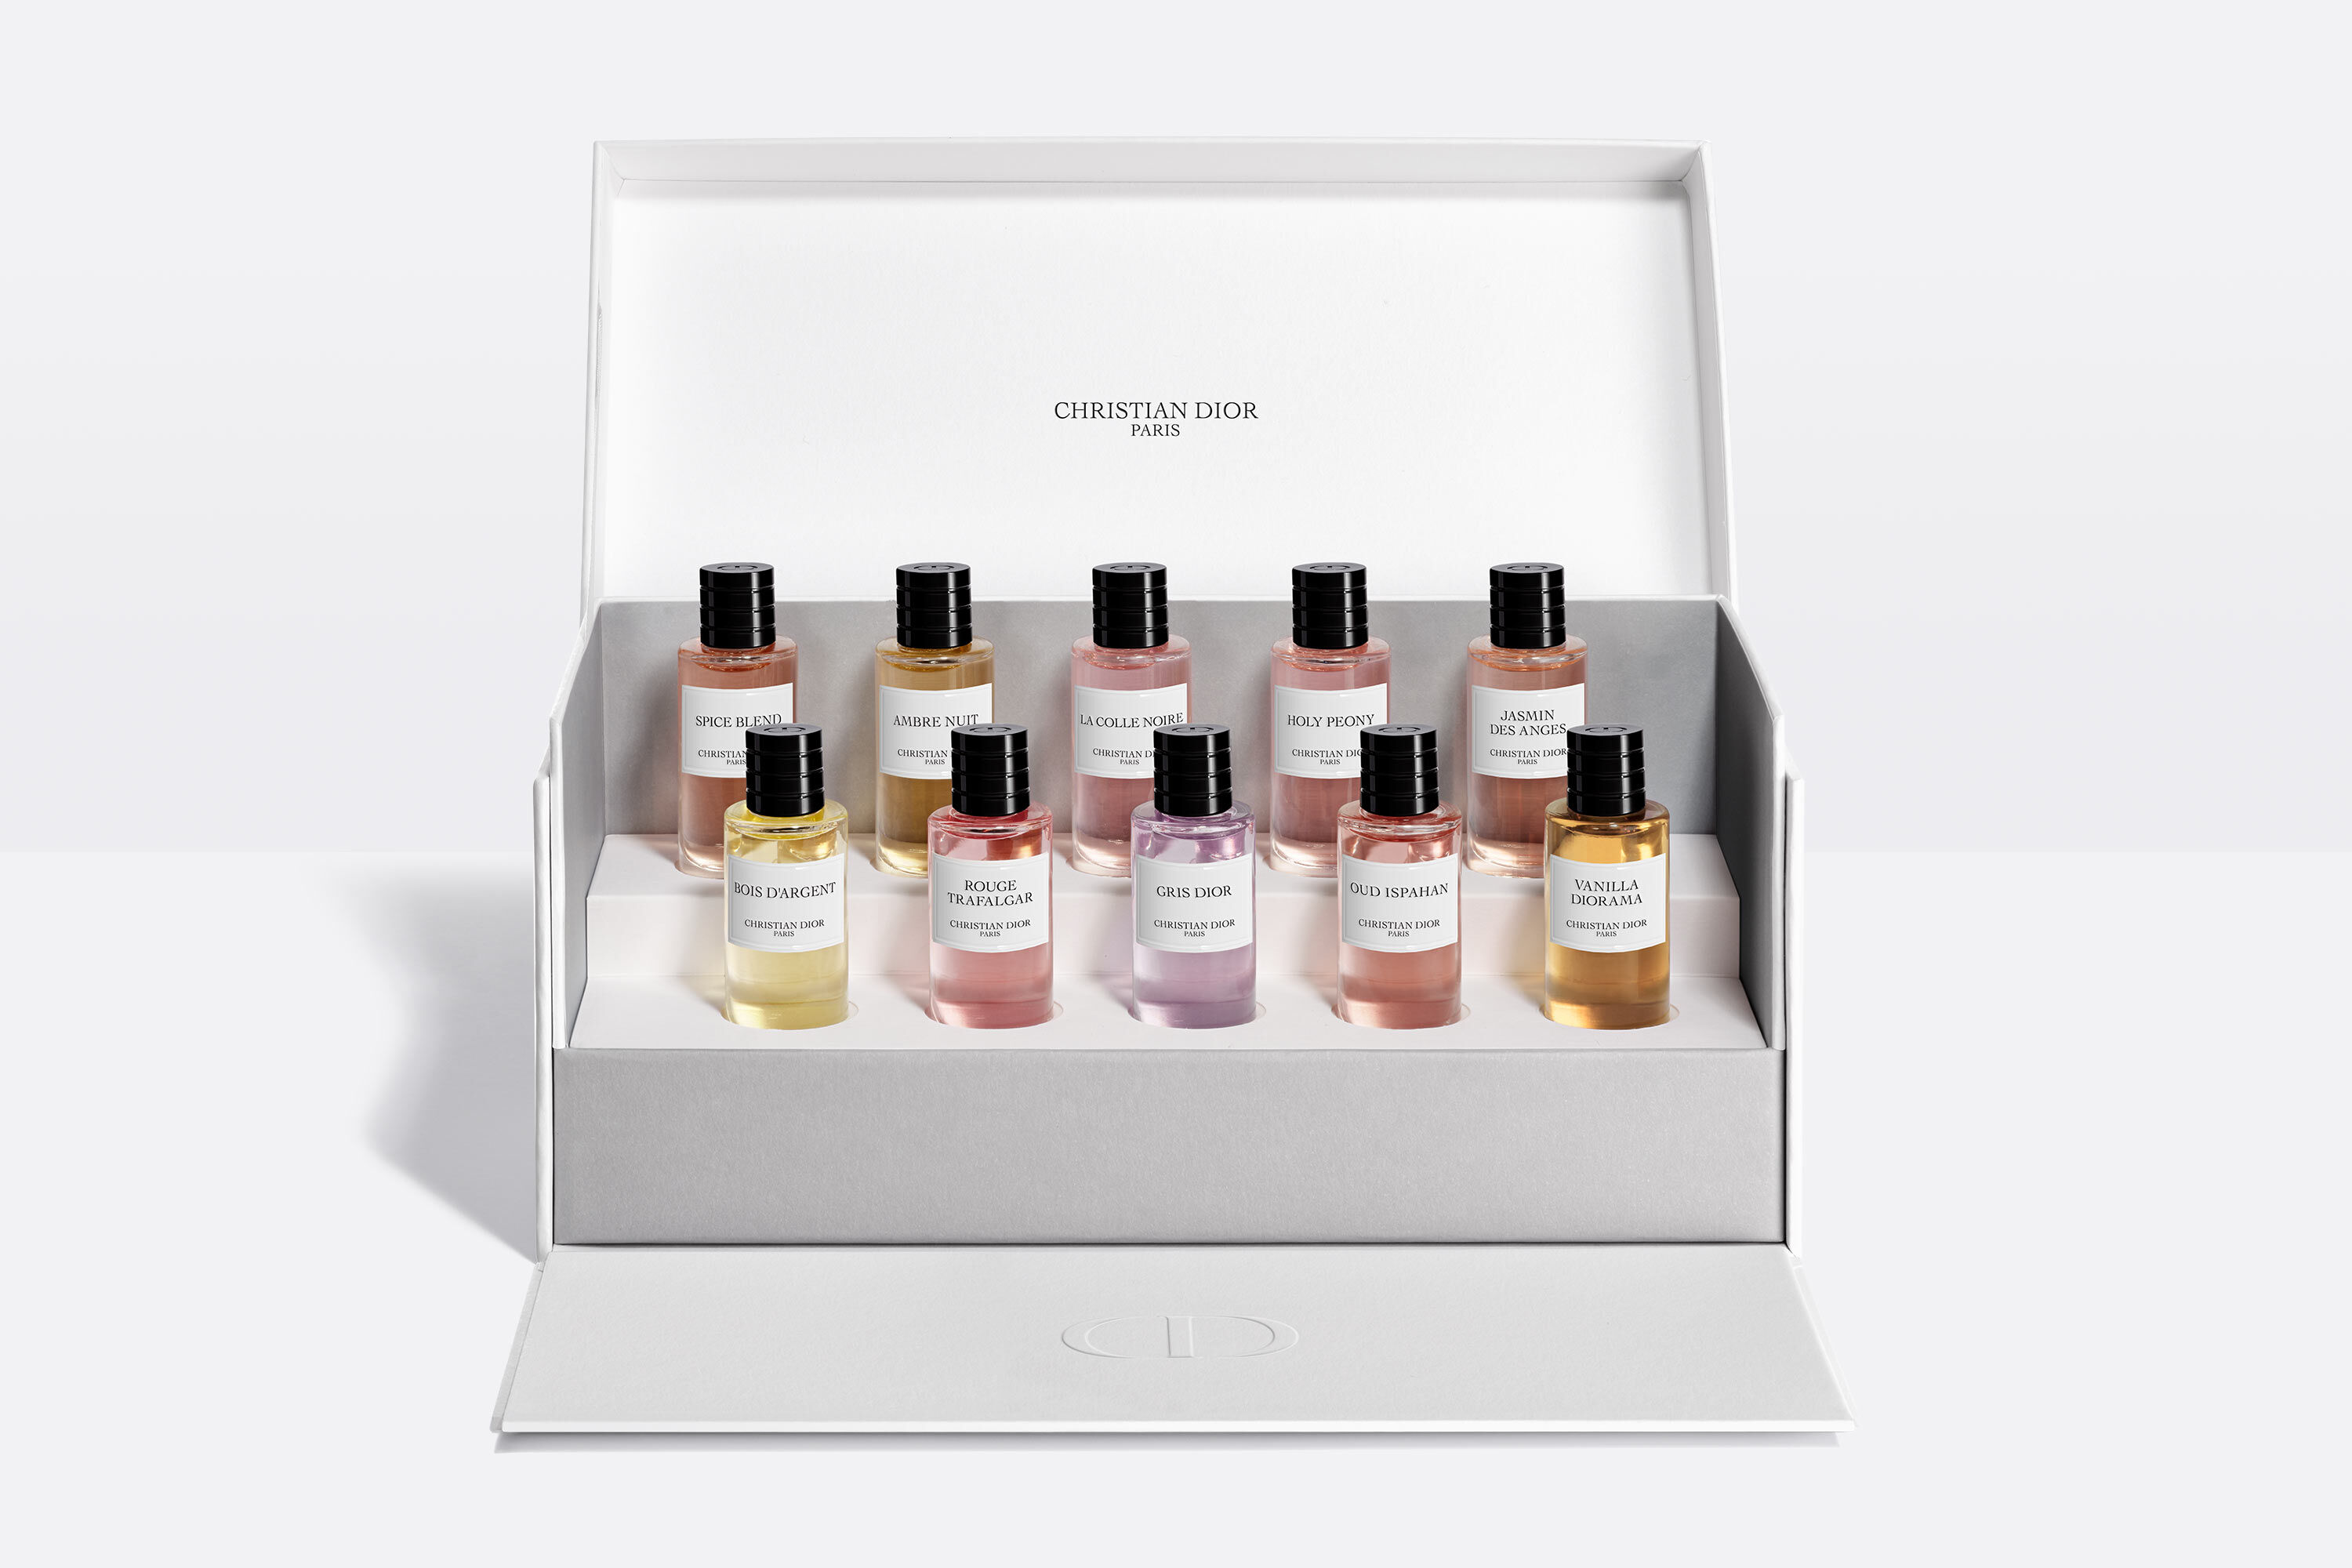 Cập nhật 61 về dior perfume discovery set mới nhất  cdgdbentreeduvn